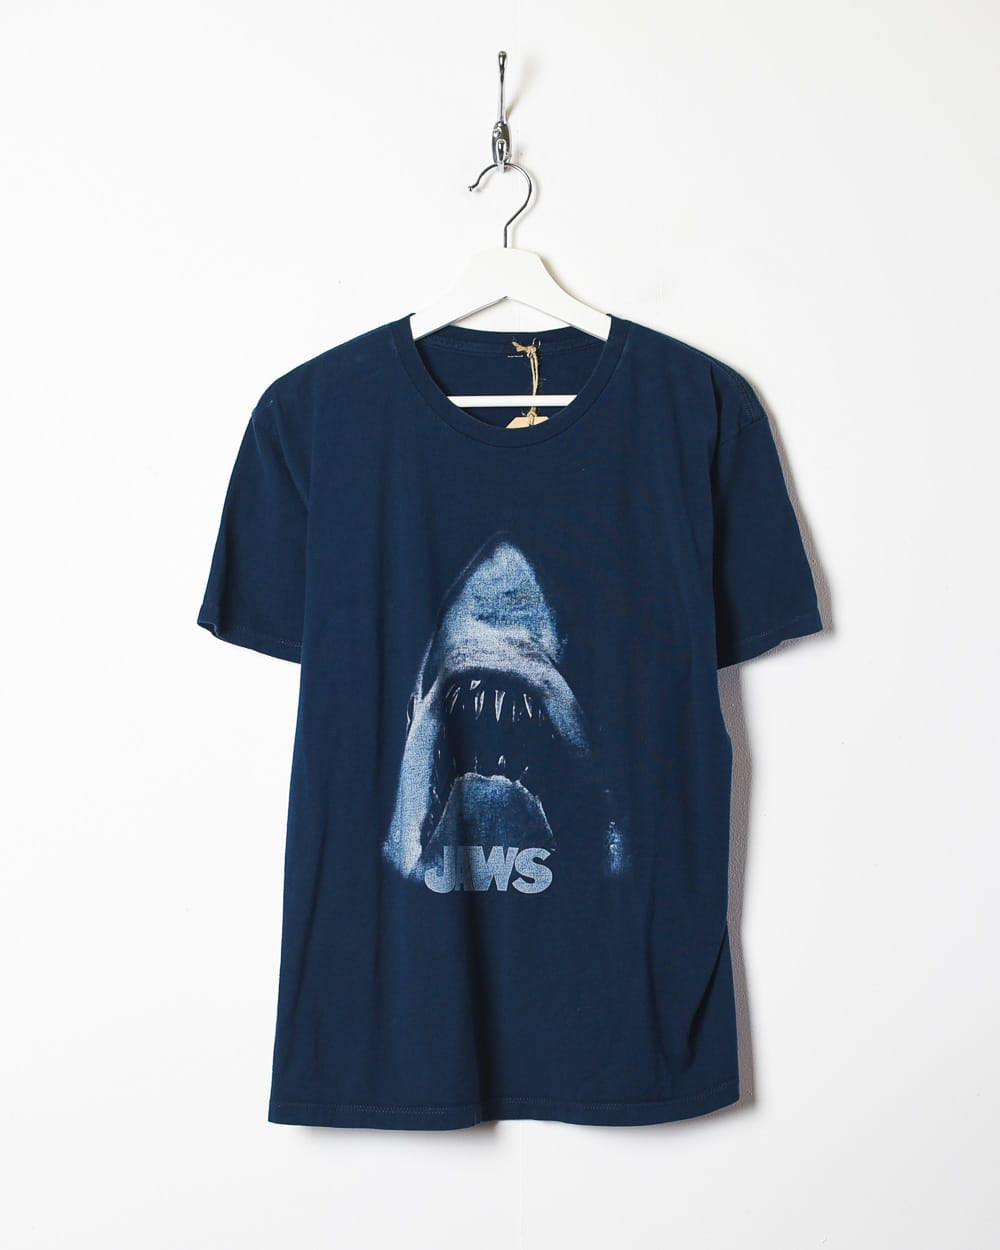 Navy Jaws Graphic T-Shirt - Medium